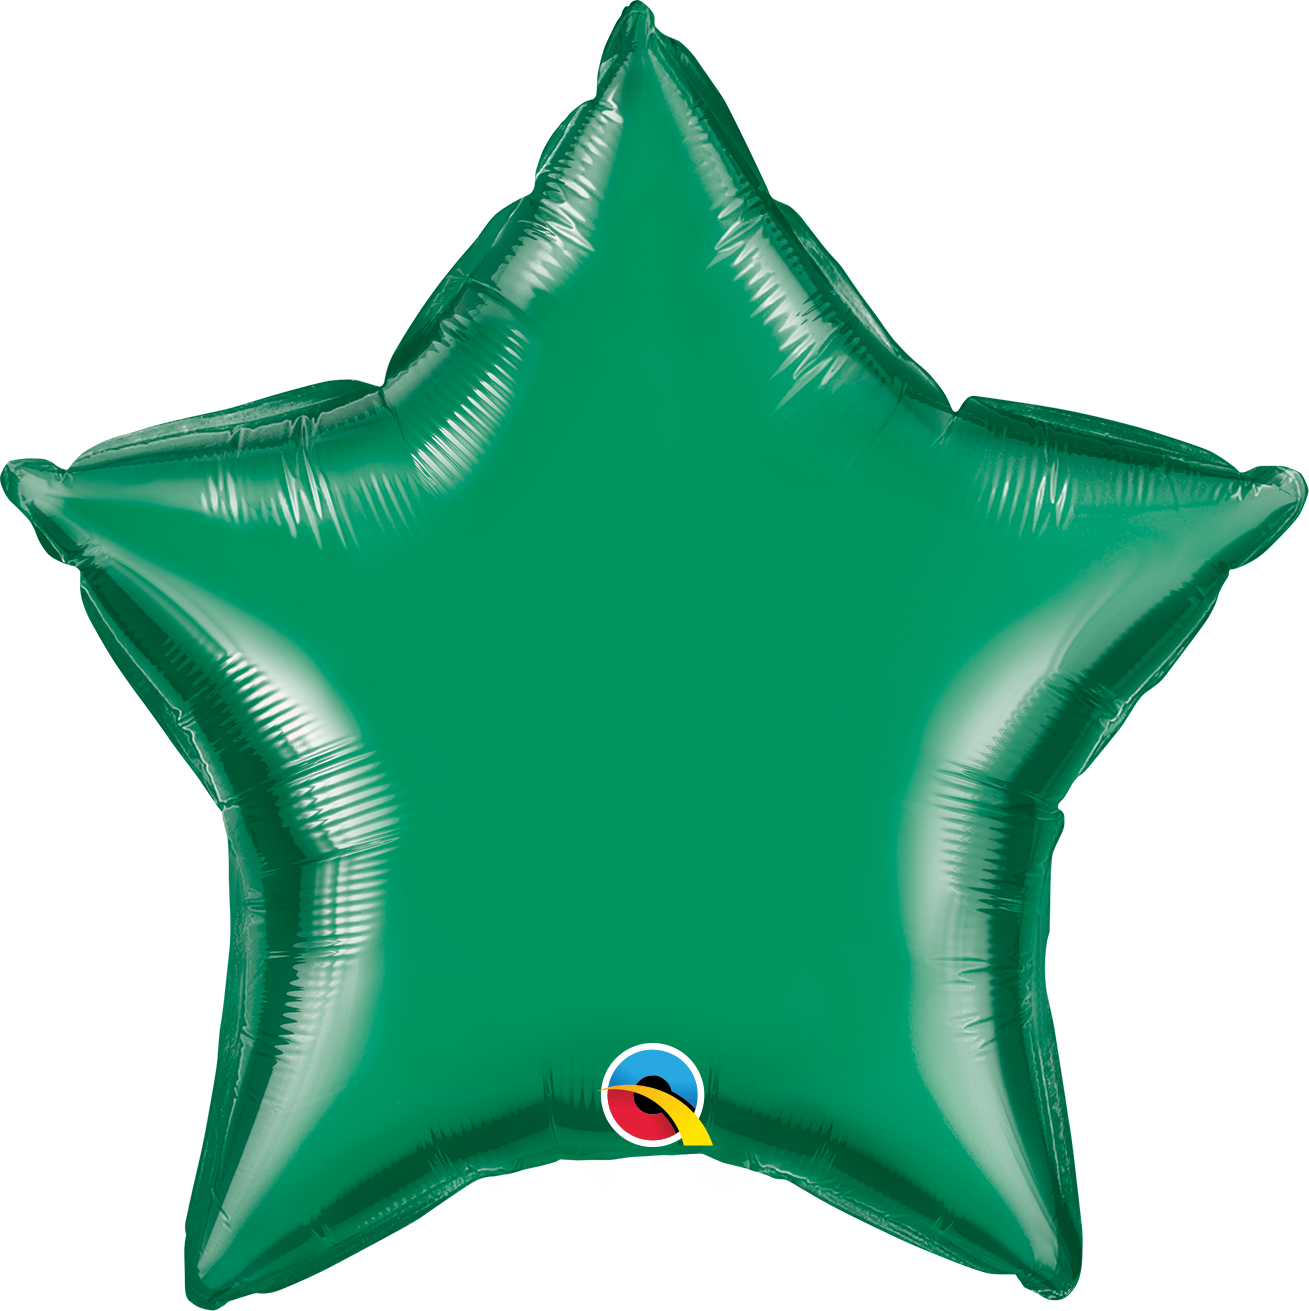 Emerald Green Star